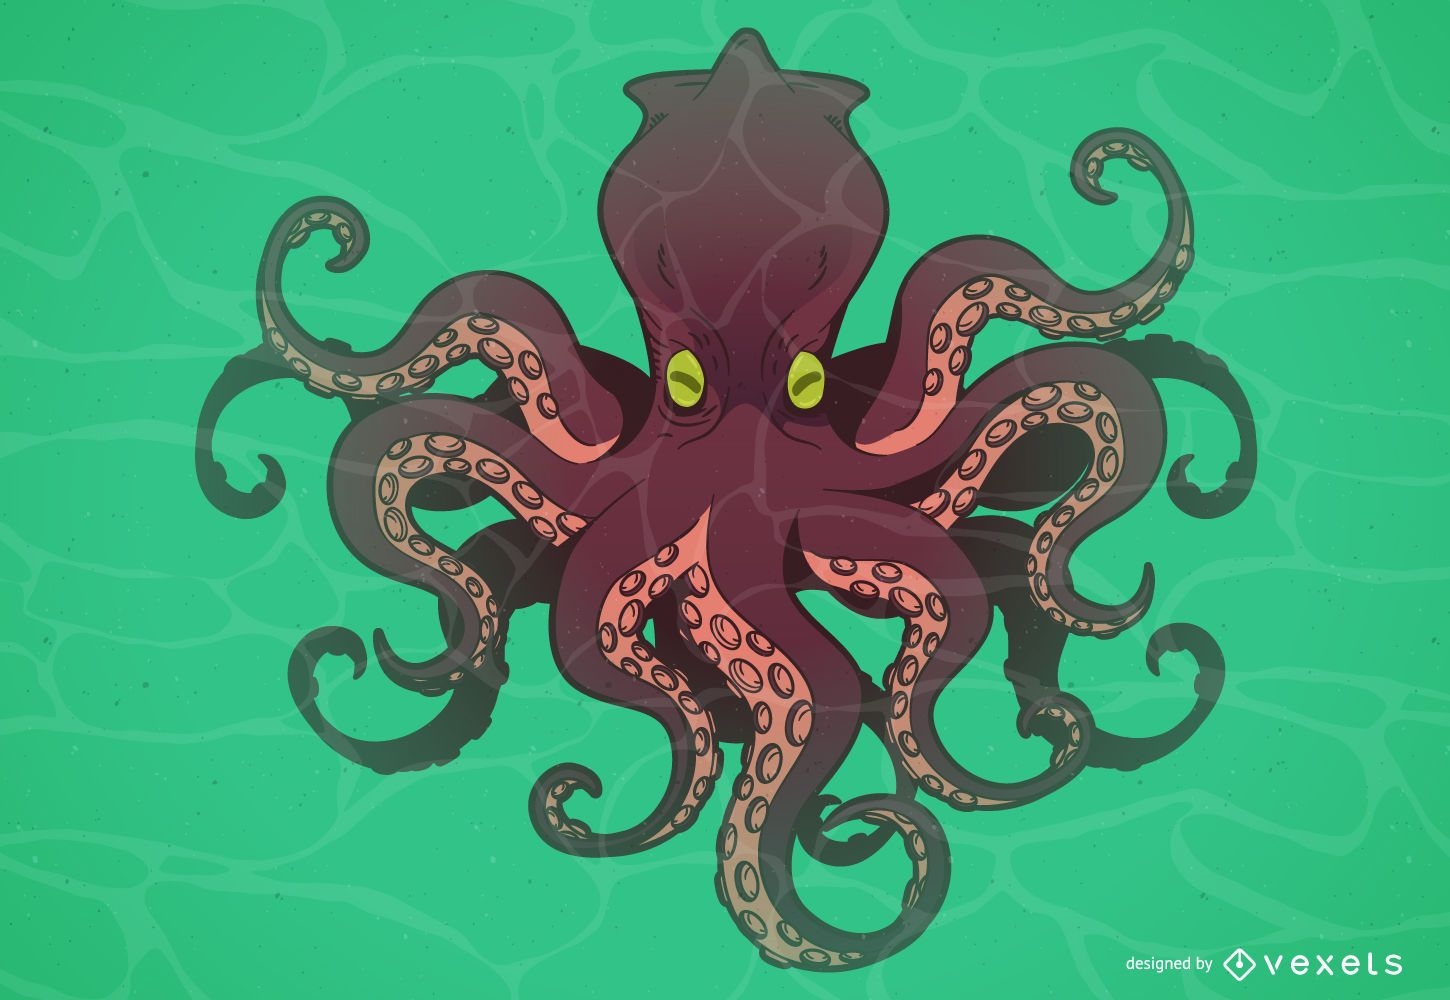 Octopus monster cartoon